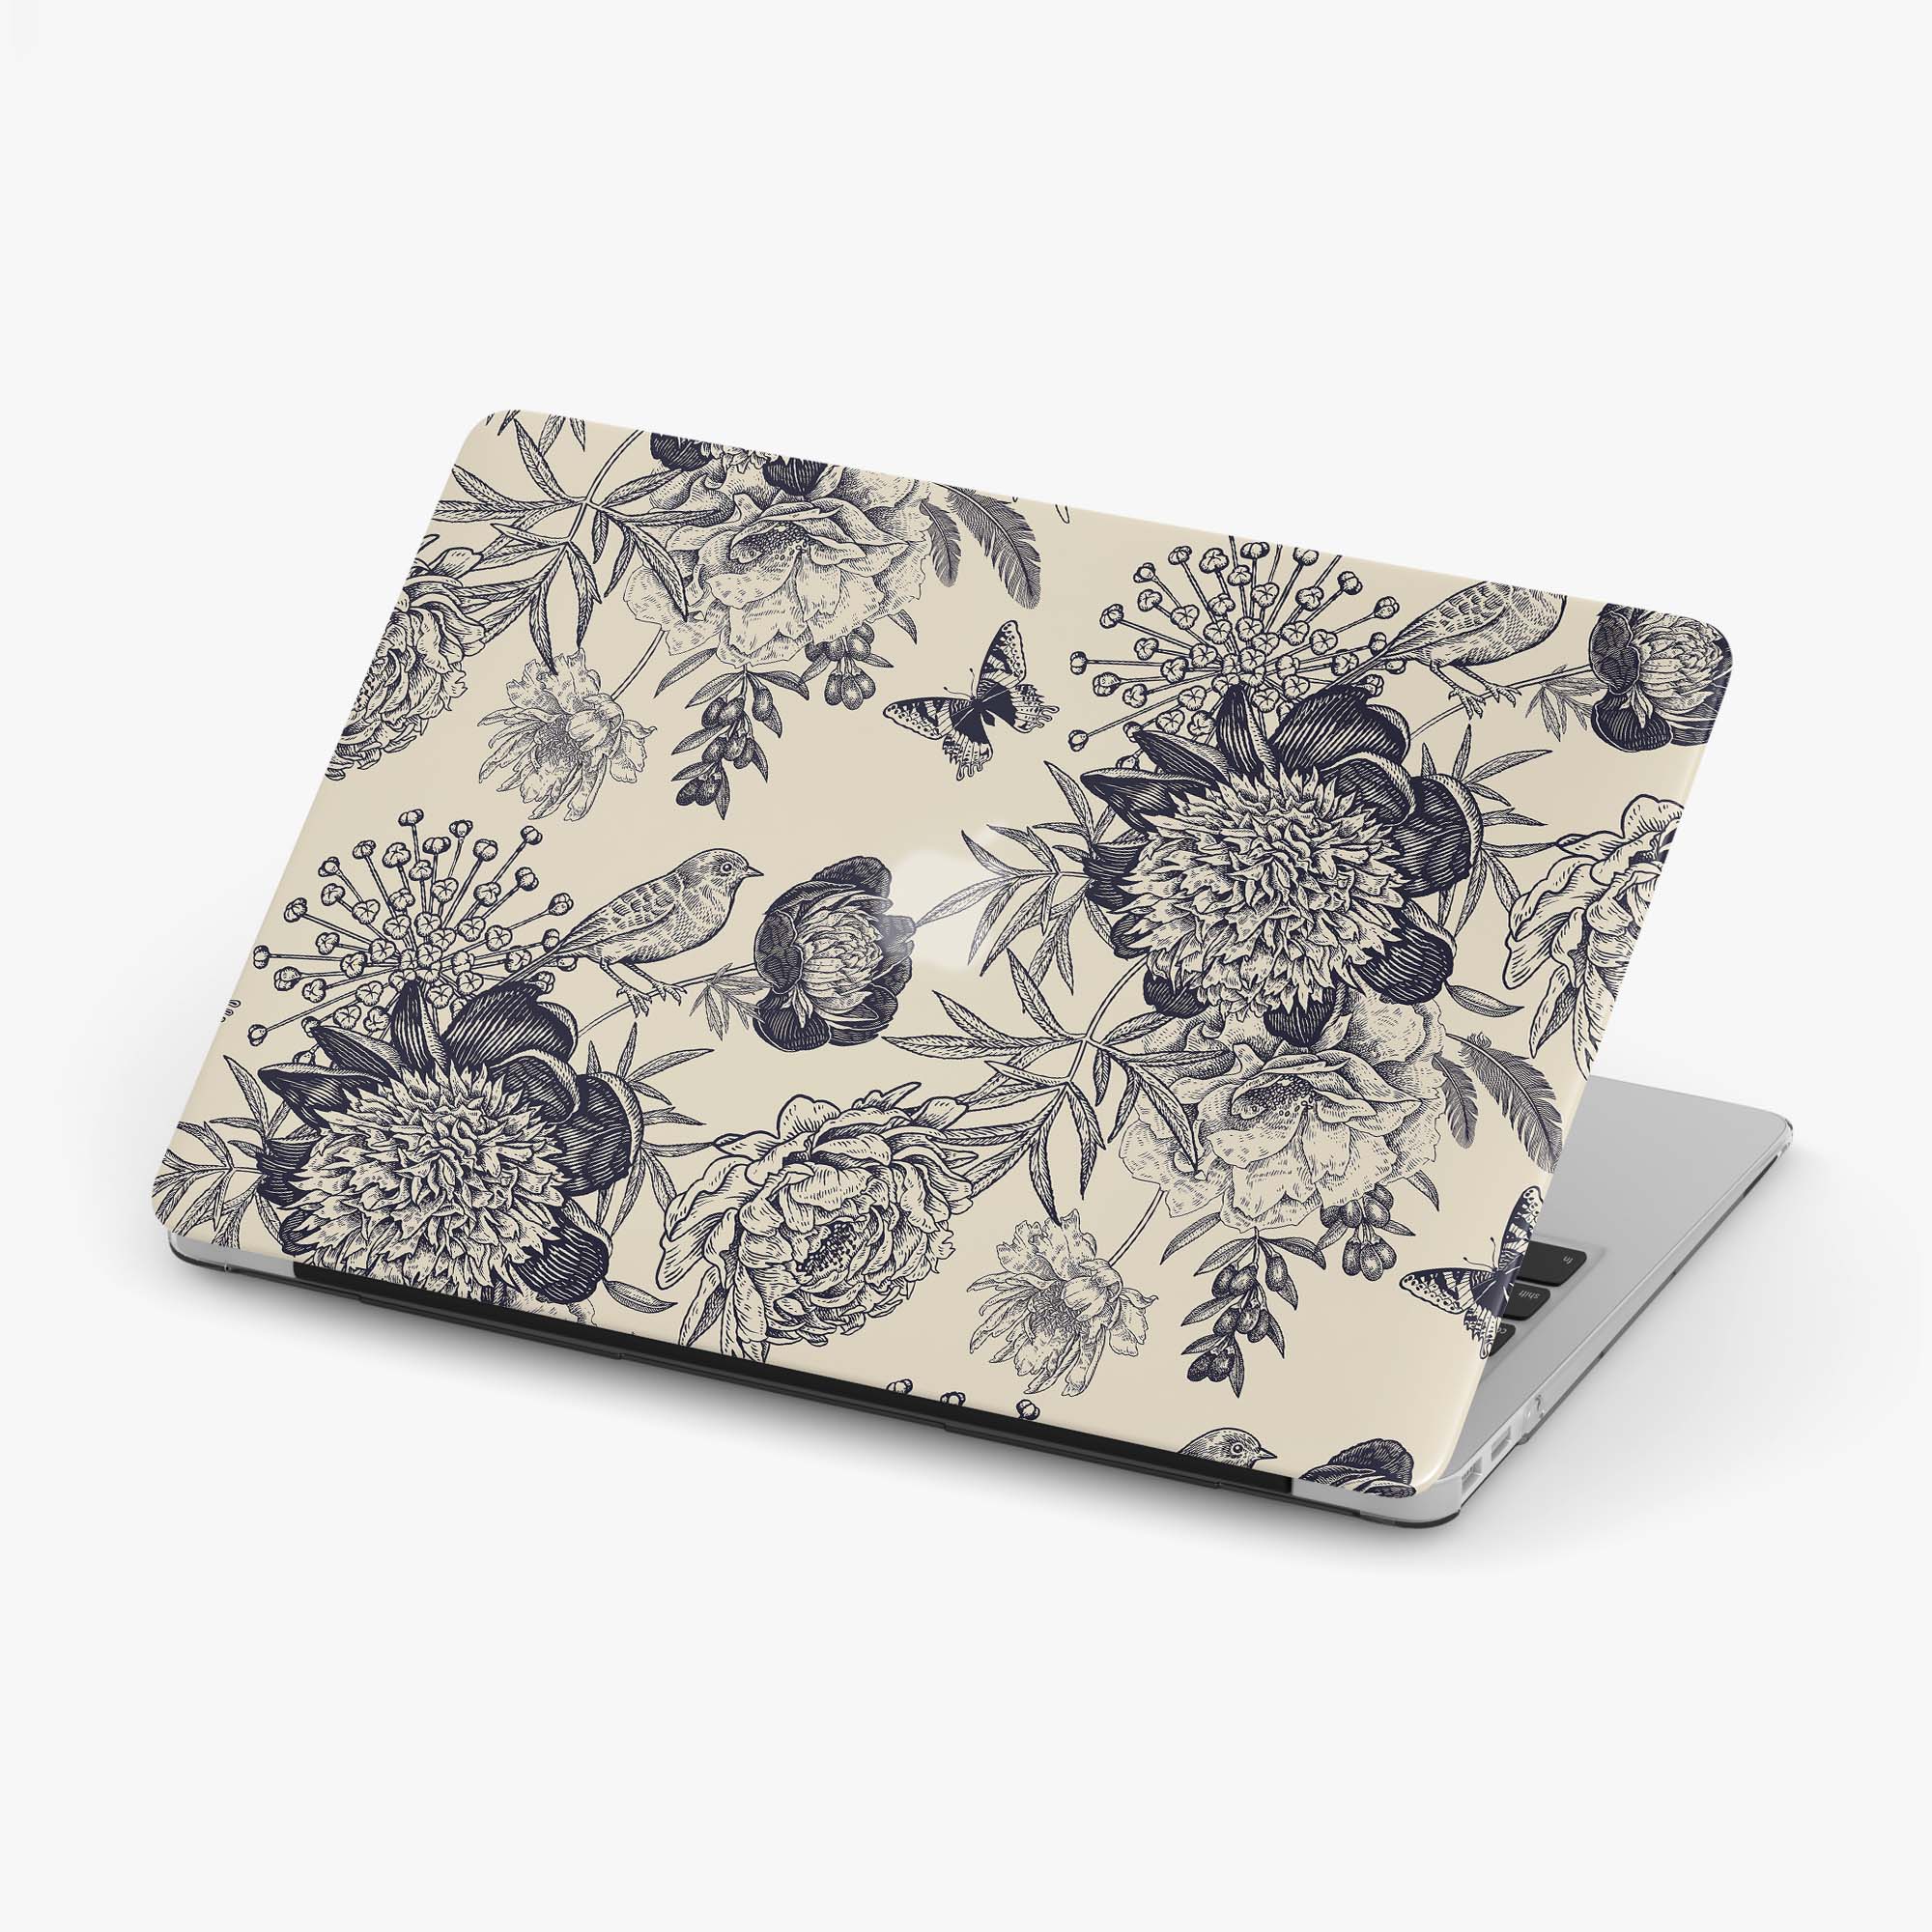 Minimalist Macbook Case Plants Flowers Design